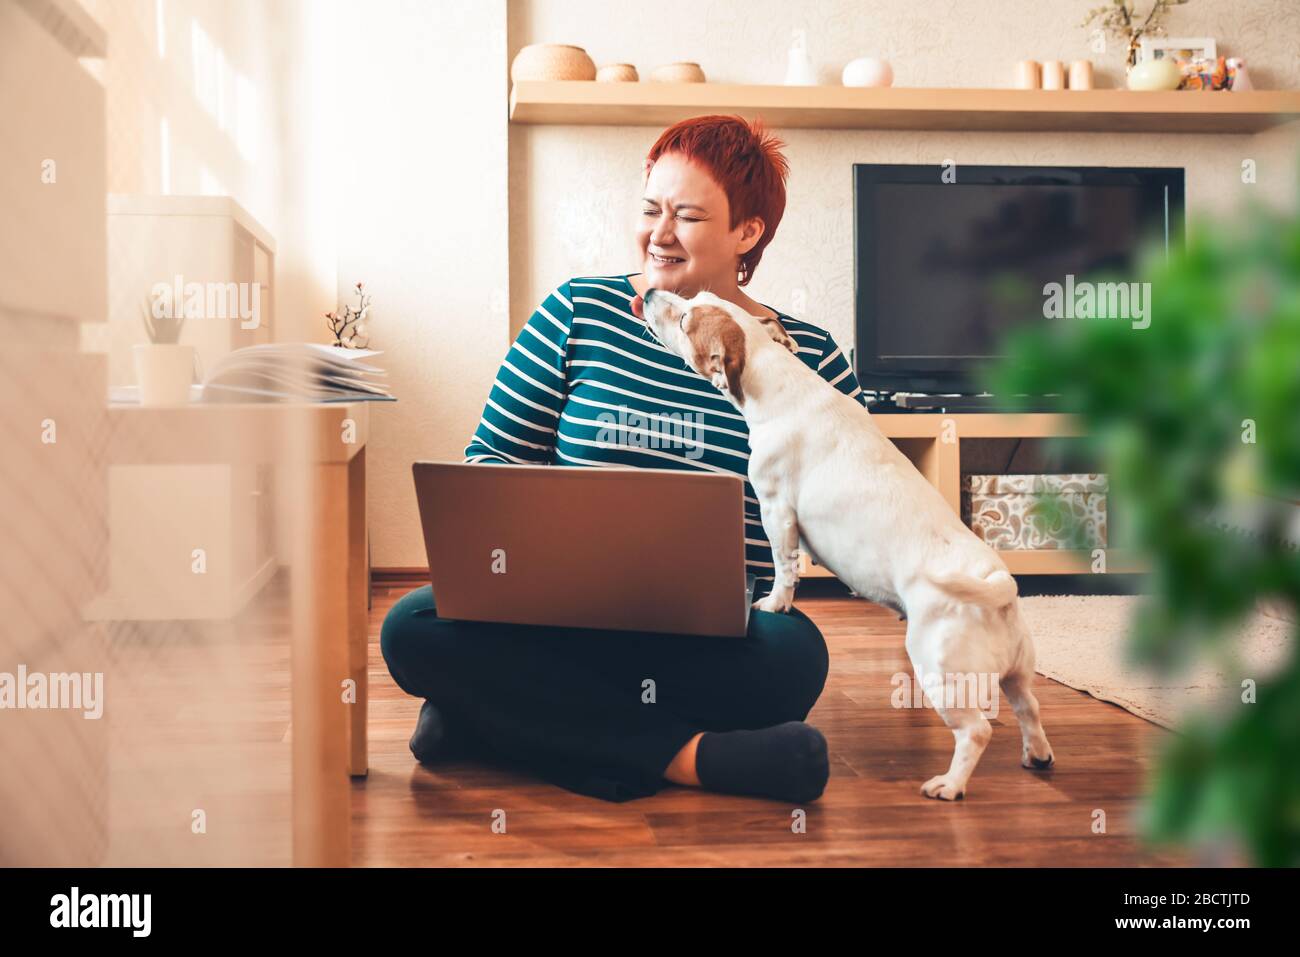 Woman works online using laptop computer, dog interferes. Quarantine coronavirus Stock Photo